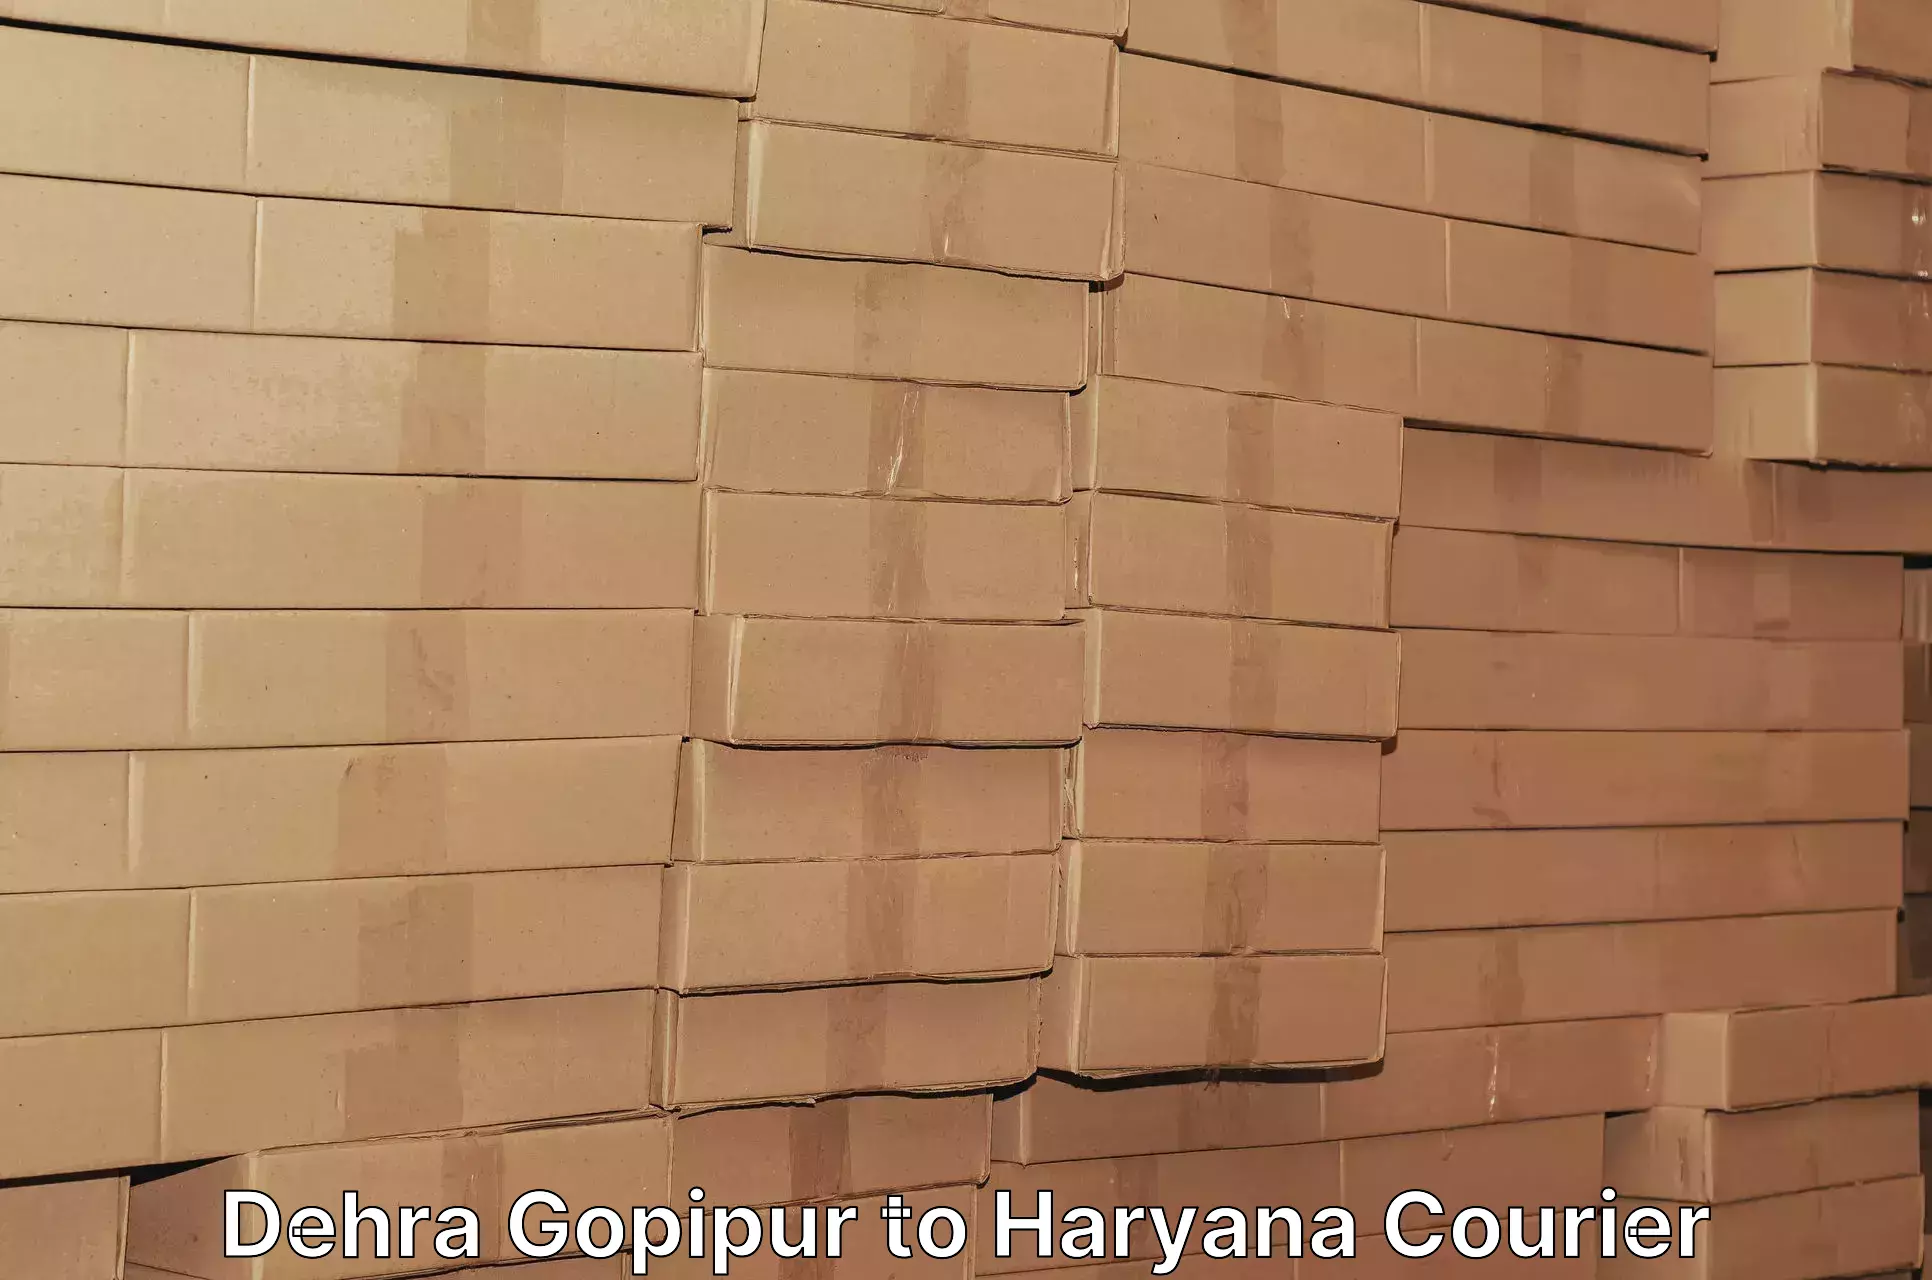 Smart logistics strategies Dehra Gopipur to Bilaspur Haryana